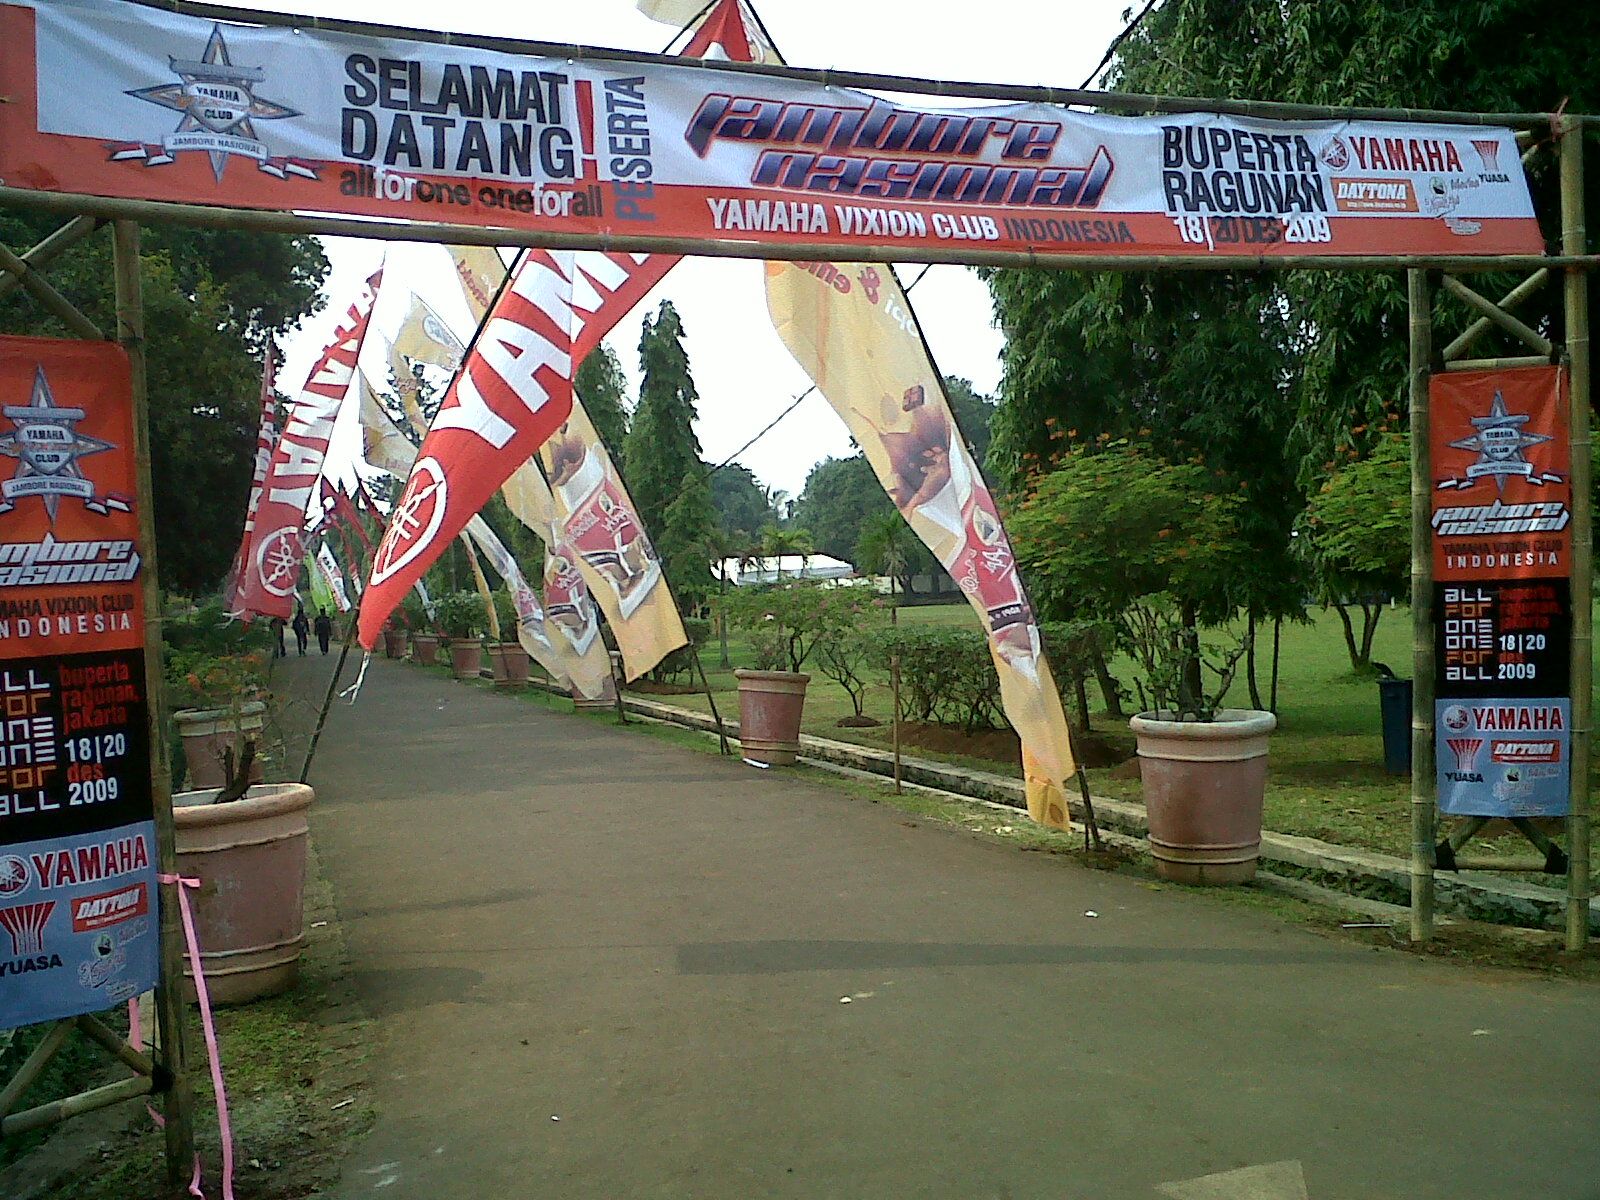 V Ixion Banjiri Ragunan Di Acara 1st Jambore Nasional Yamaha V